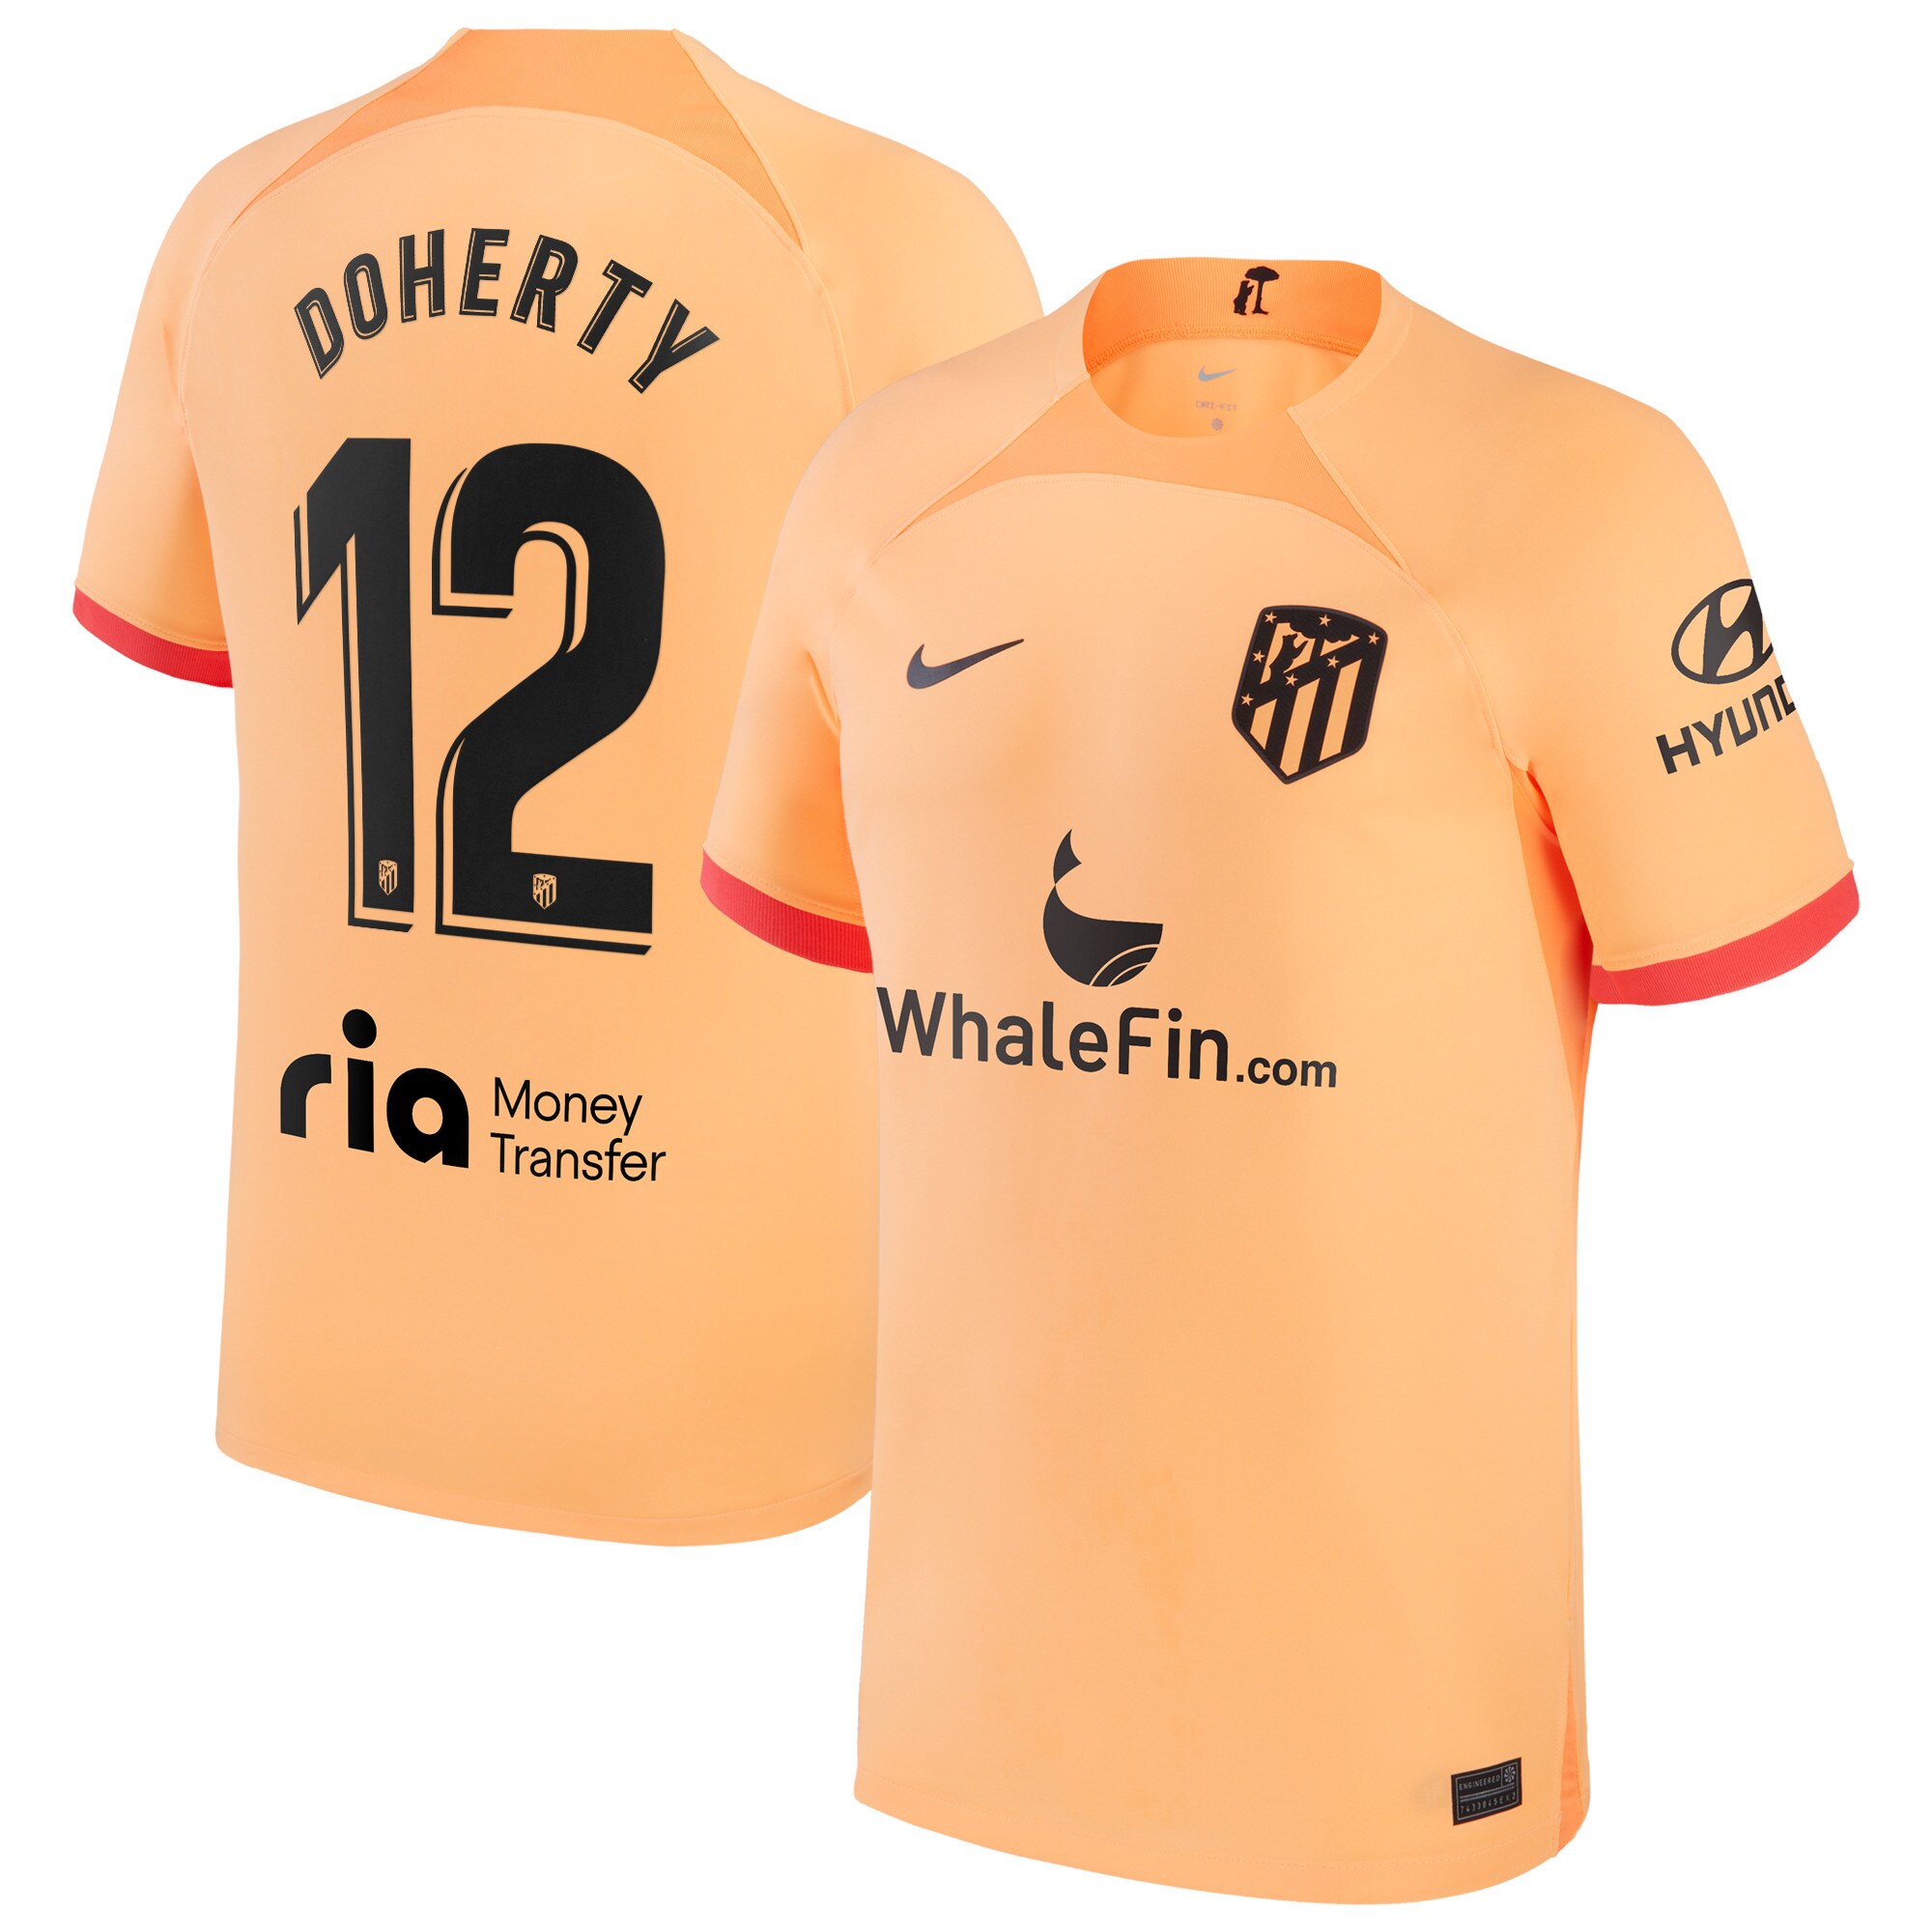 Atlético de Madrid Third Stadium Shirt 2022-23 with Doherty 12 printing